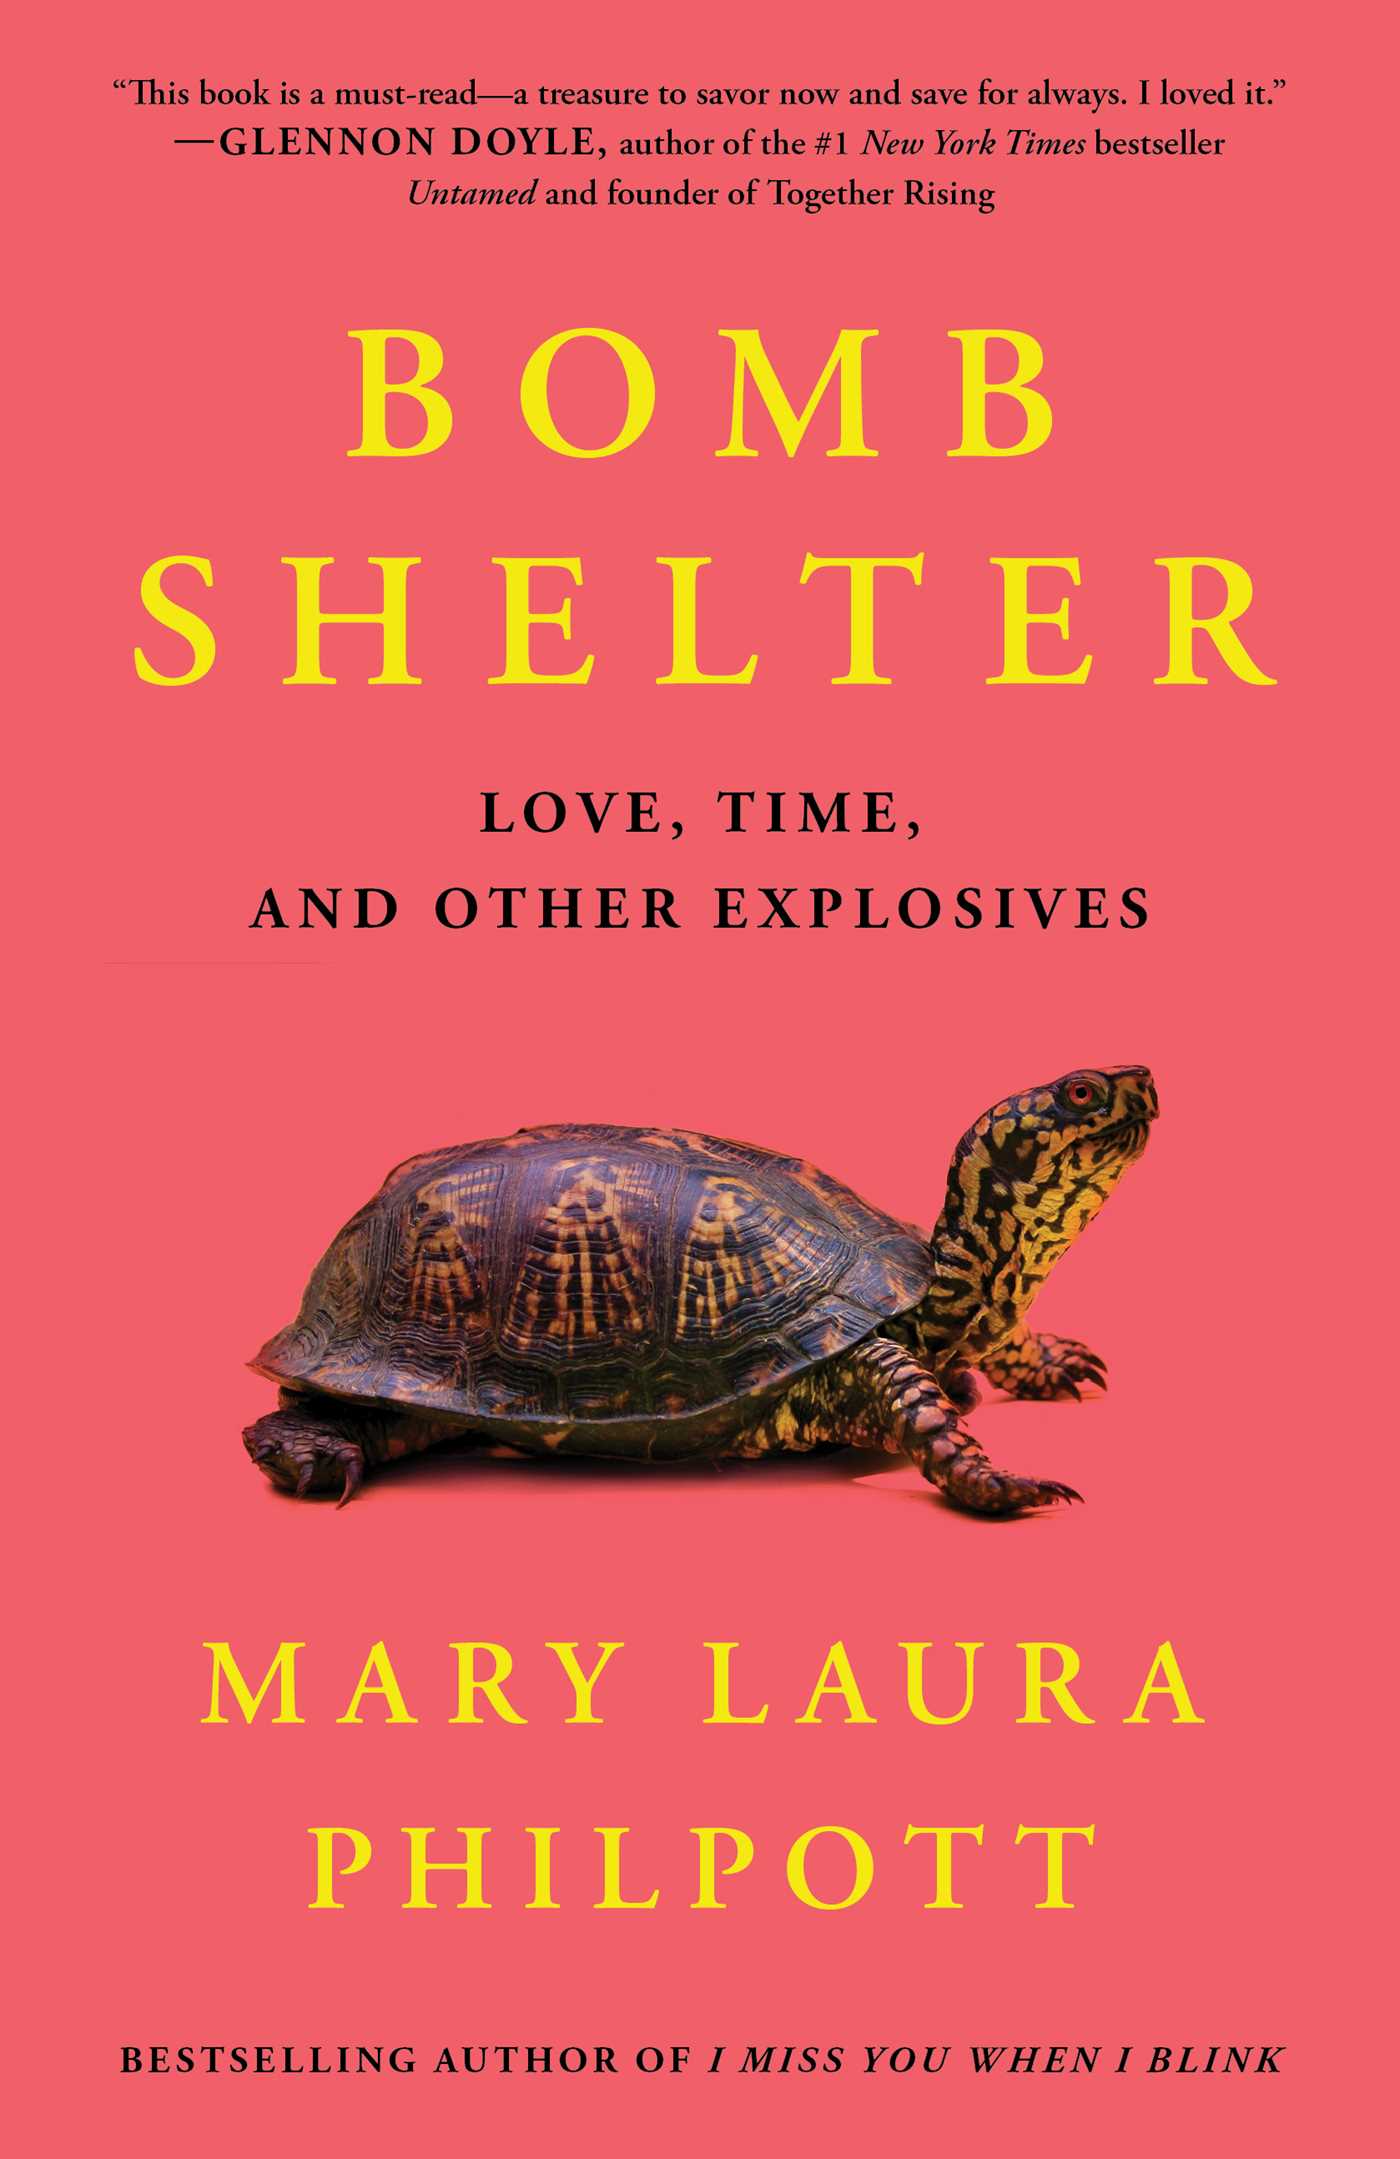 Image for "Bomb Shelter"